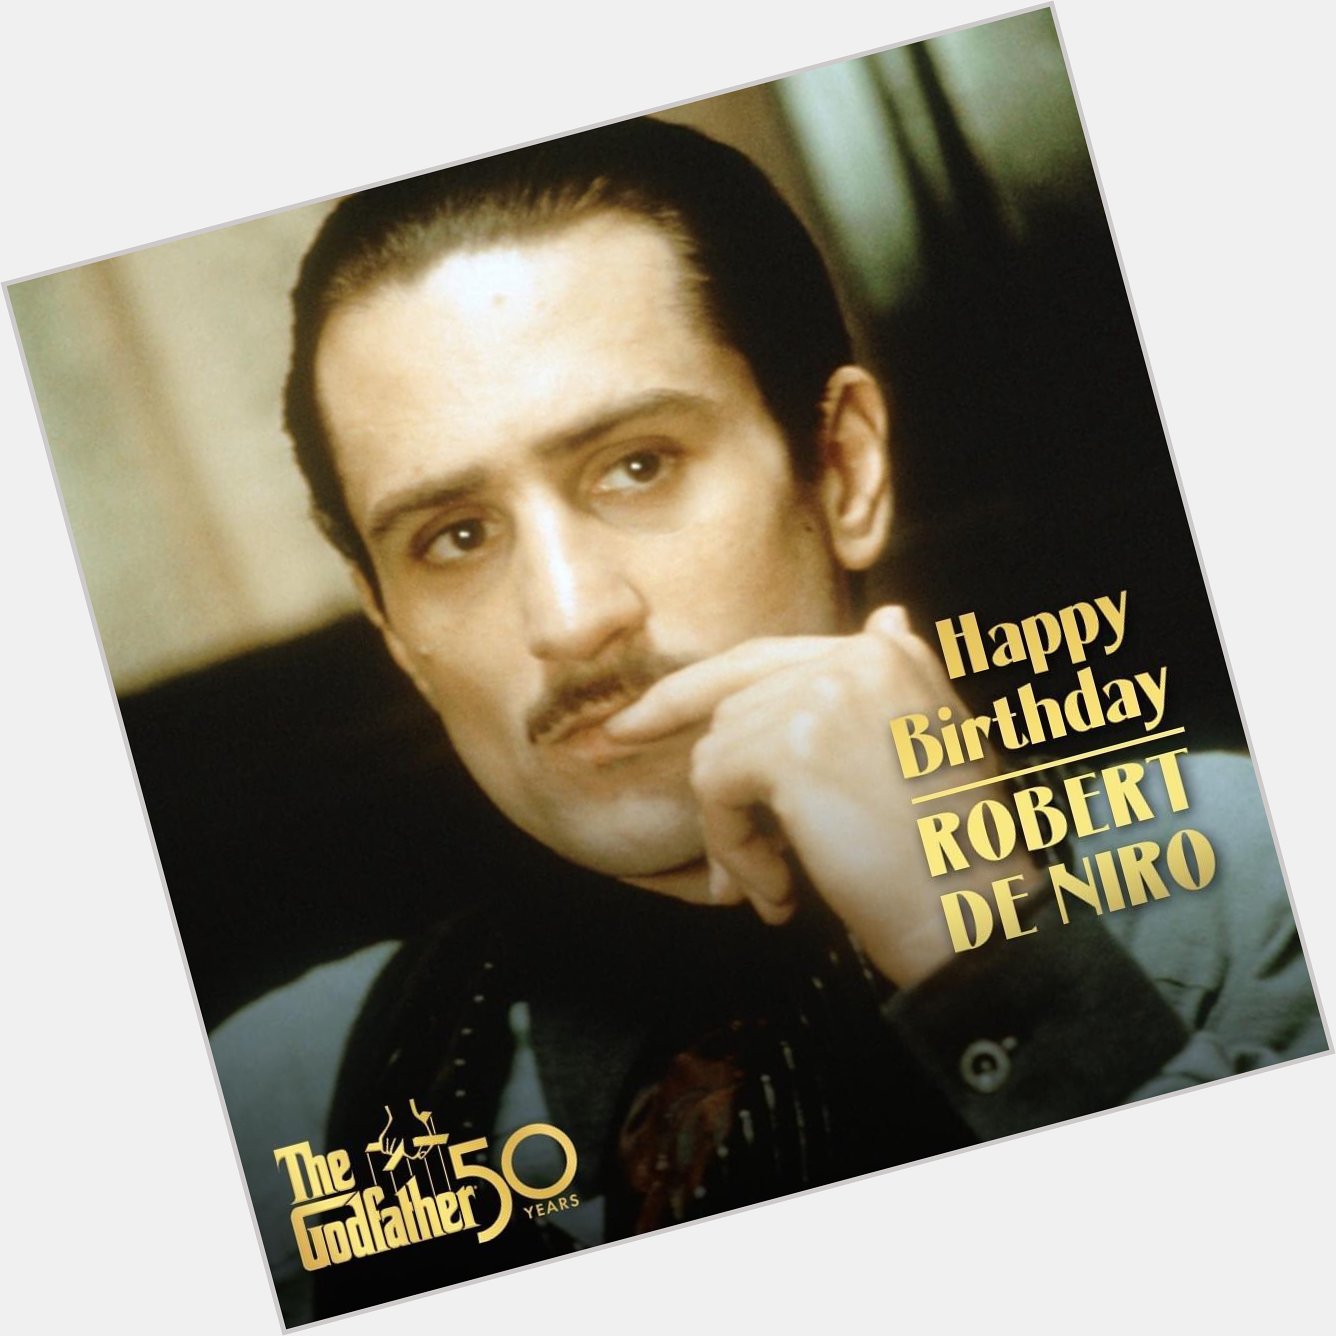 Tanti auguri! Wishing Robert De Niro a Happy Birthday today! 